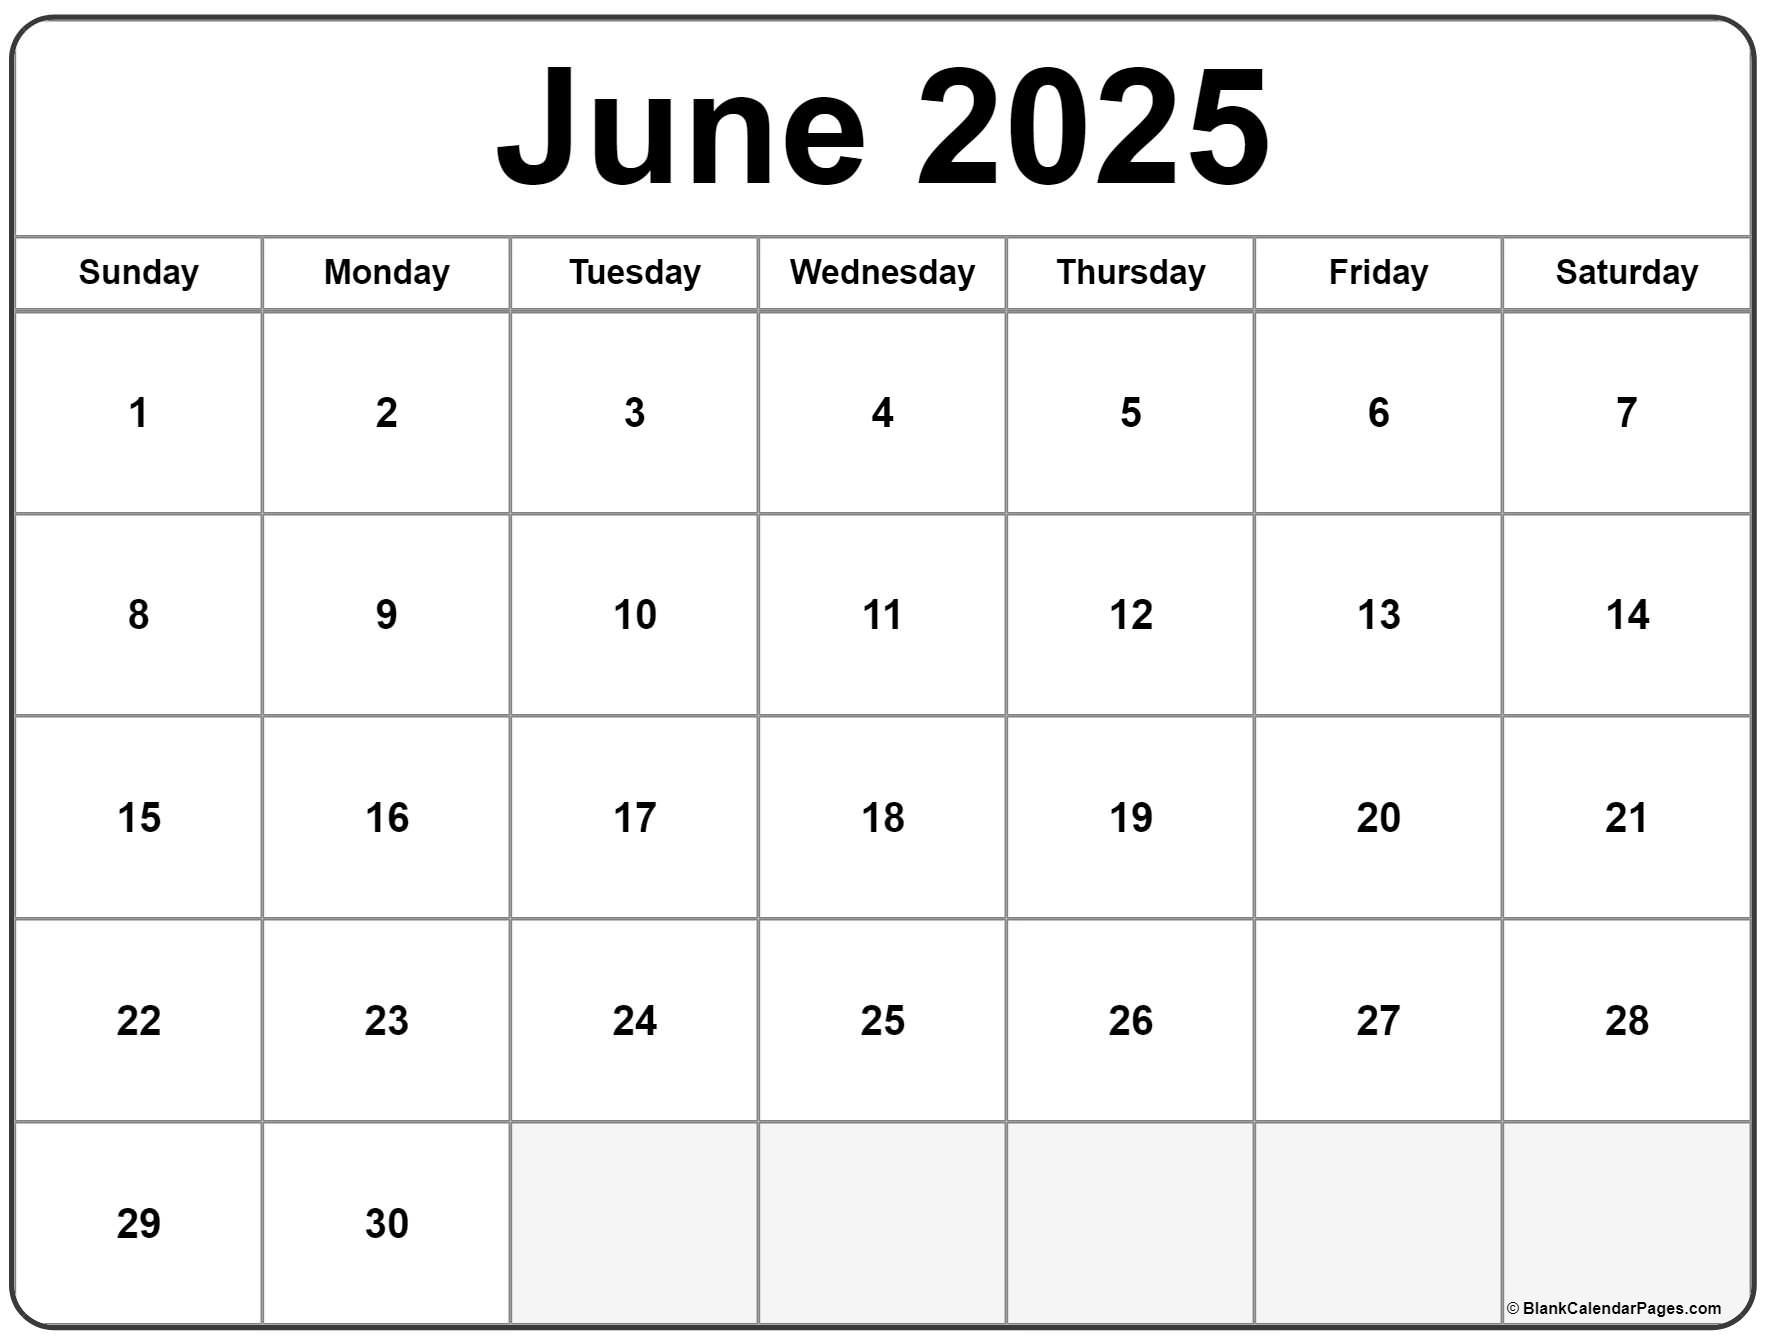 june-2025-calendar-free-printable-calendar